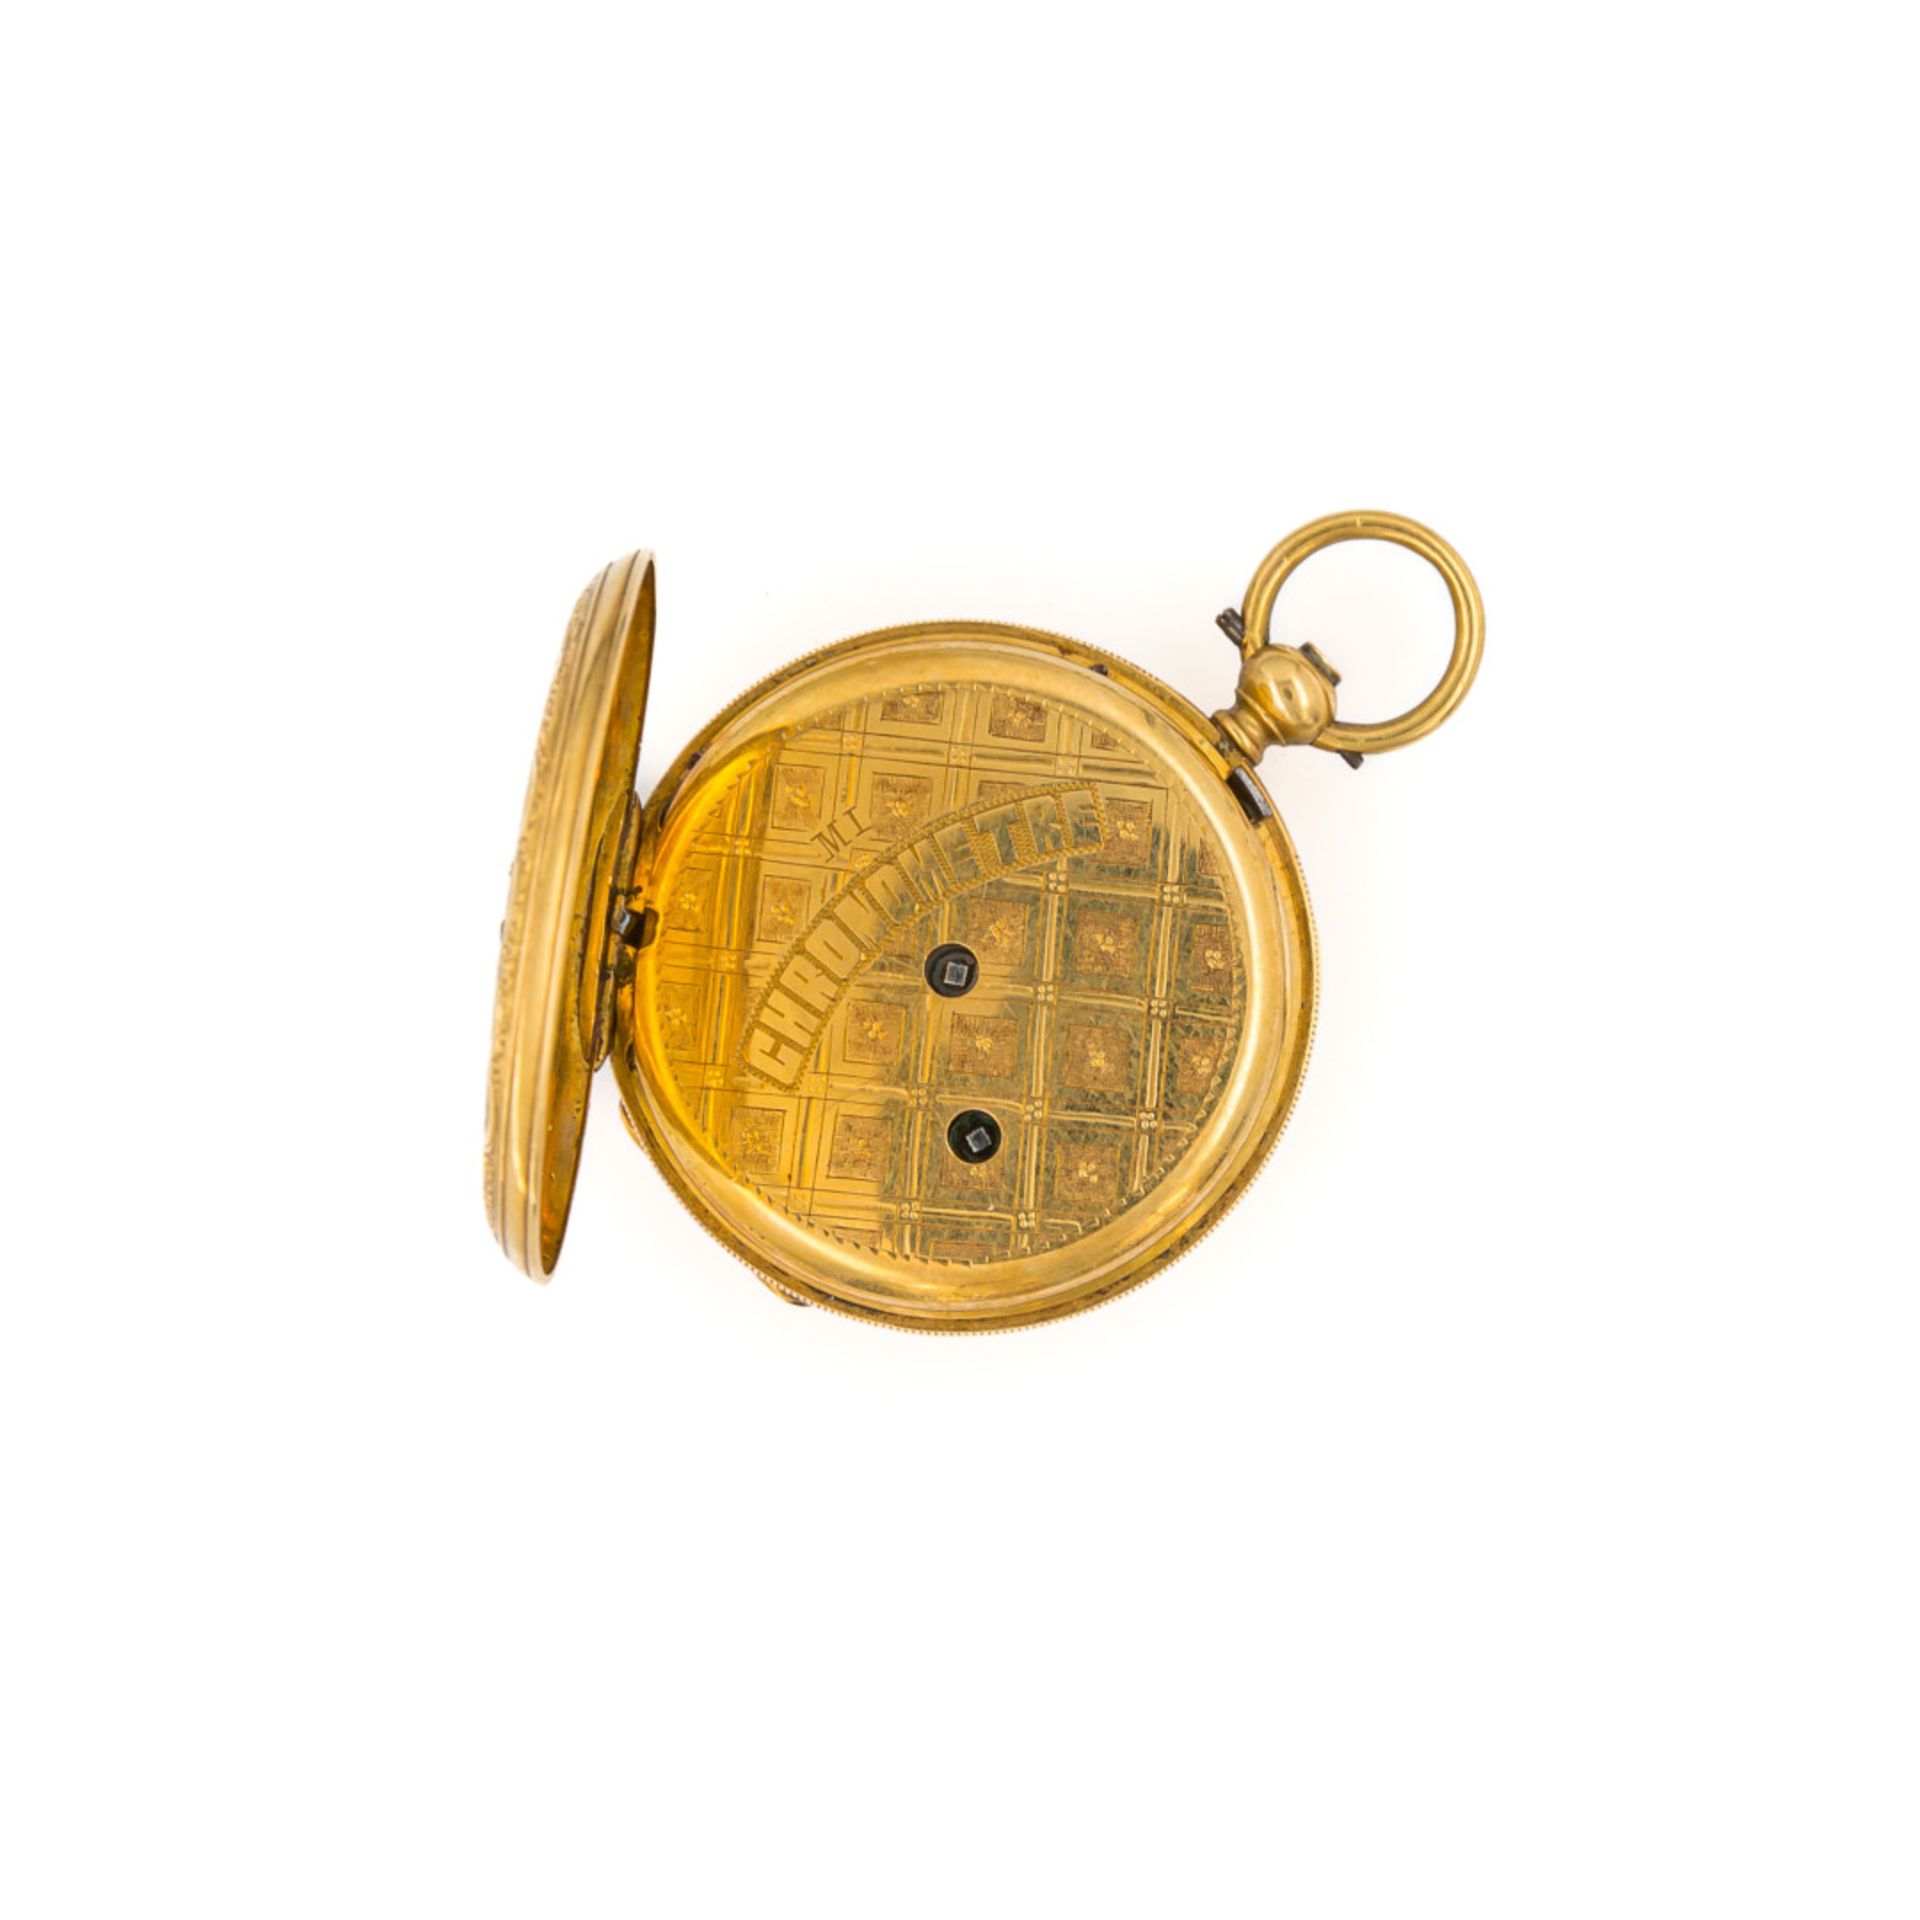 HUNTER CASE IN GOLD AND ENAMEL, CIRCA 1860 - HUNTER CASE IN GOLD AND ENAMEL, CIRCA 1860 Case n. - Image 4 of 6